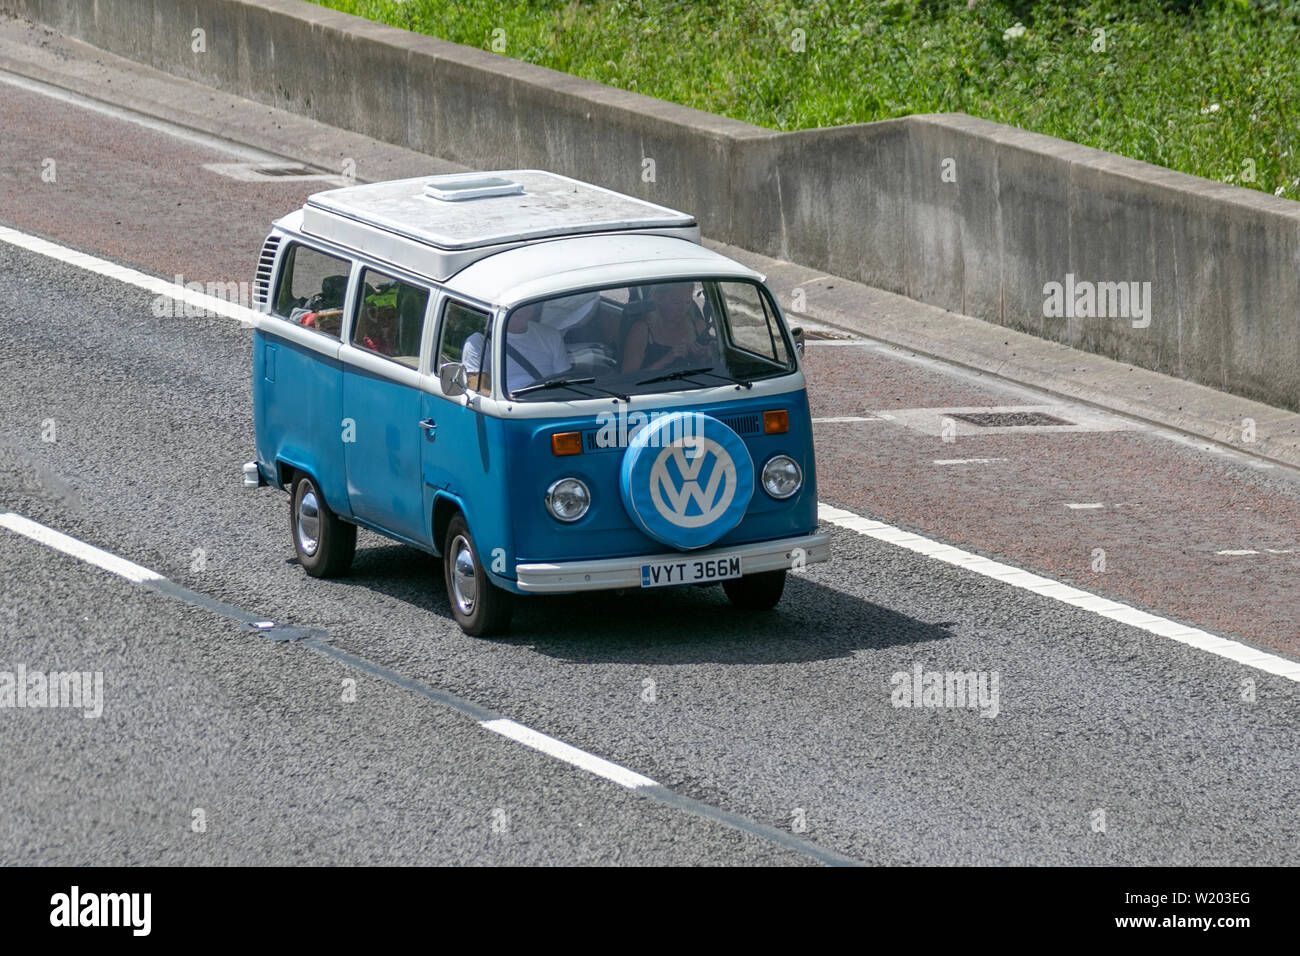 Blue white VW Volkswagen Motor Caravan; UK Vehicular traffic, transport, modern, saloon cars, north-bound on the 3 lane M6 motorway highway. Stock Photo